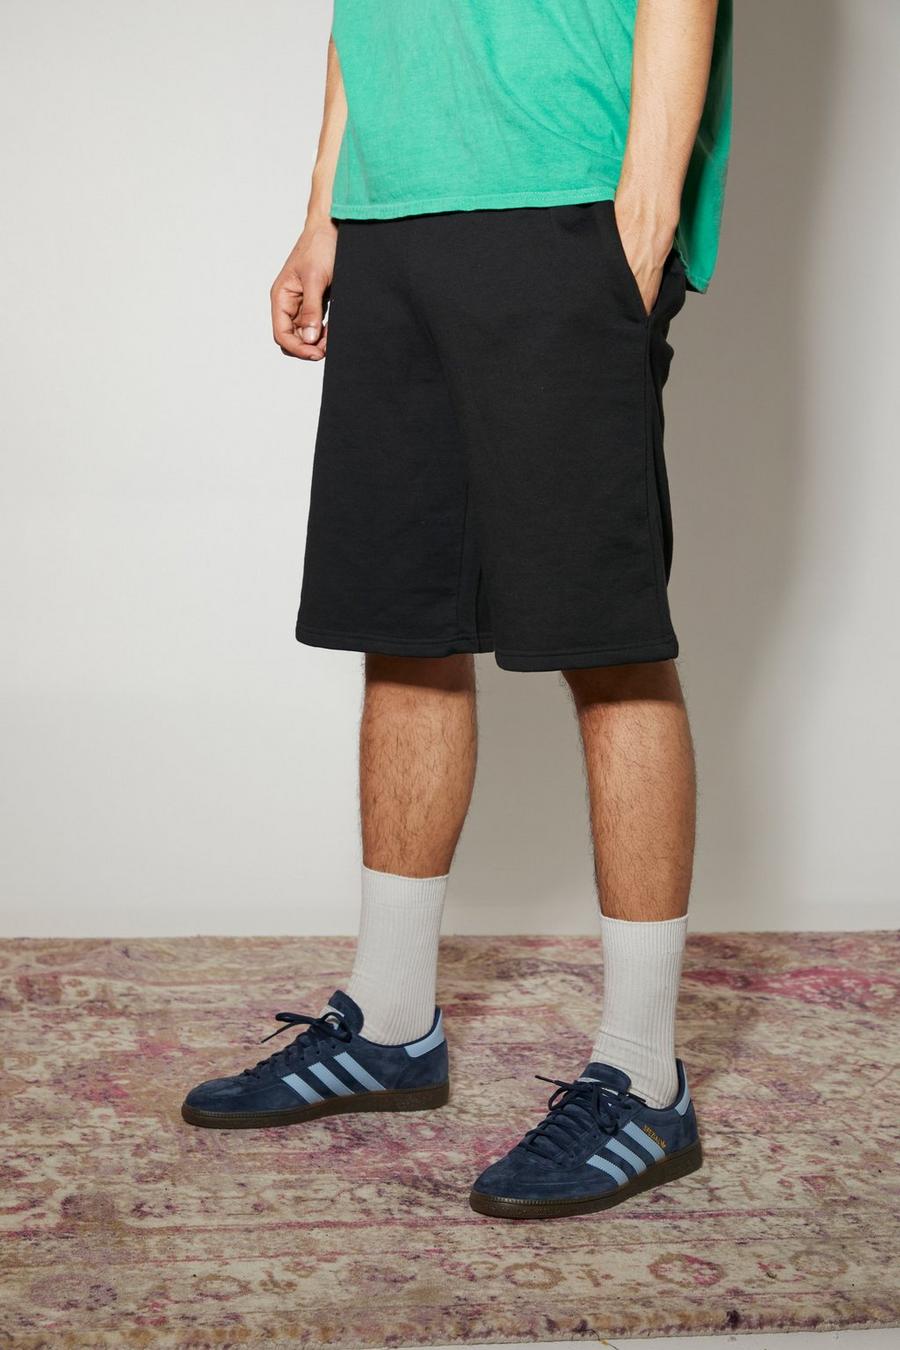 Pantalón corto holgado de tela jersey con algodón ecológico, Black negro